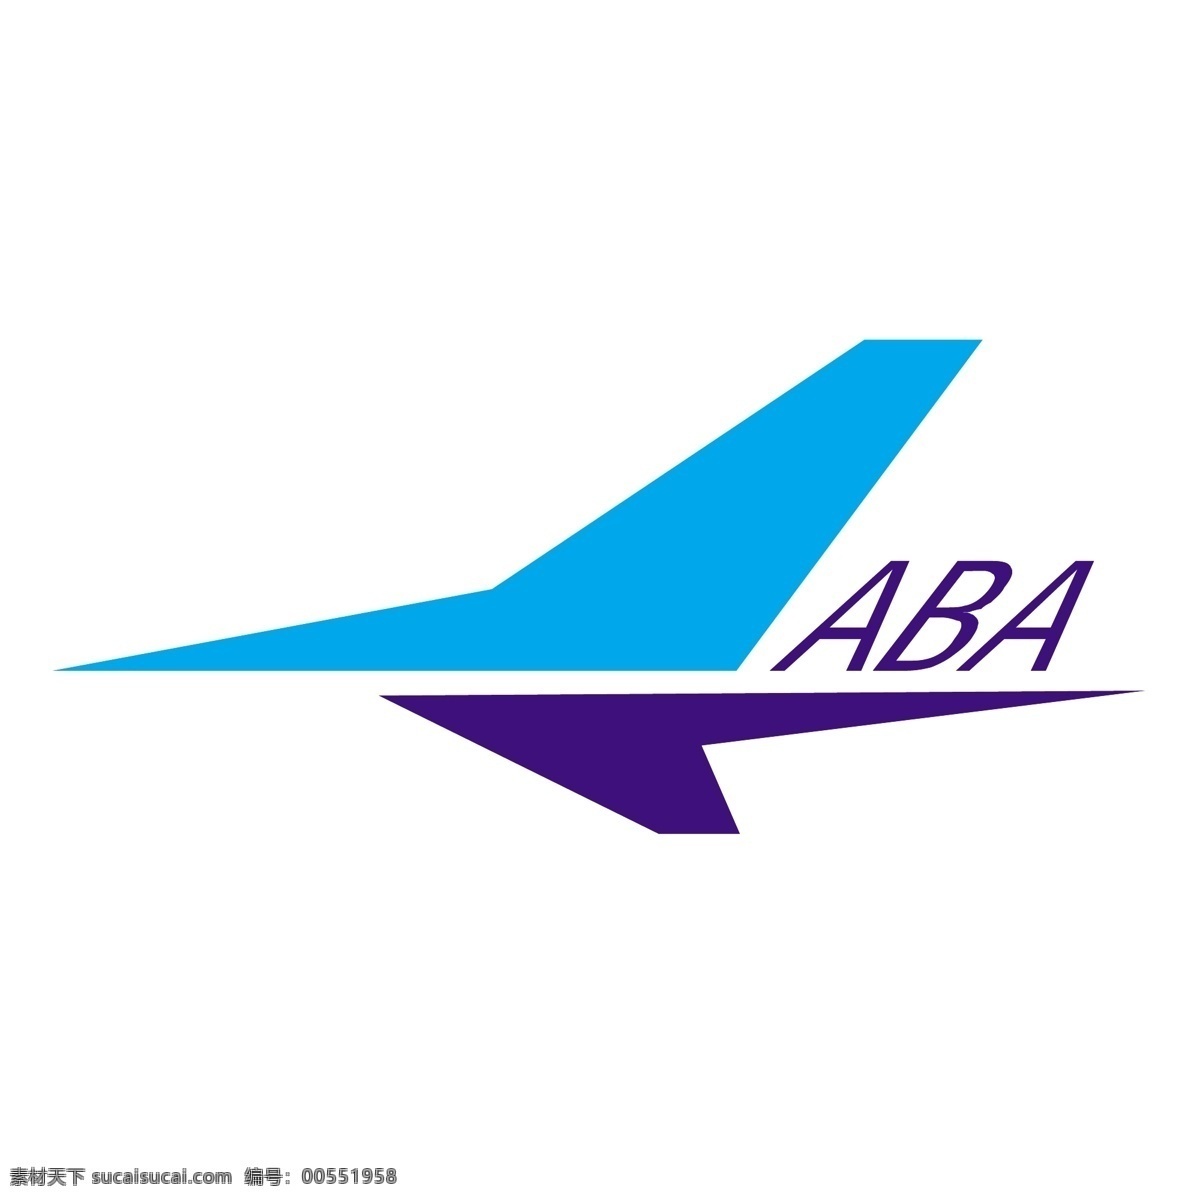 aba 航空公司 标志 logo 标识 标识标志图标 企业logo 企业 航空标识 矢量 矢量图